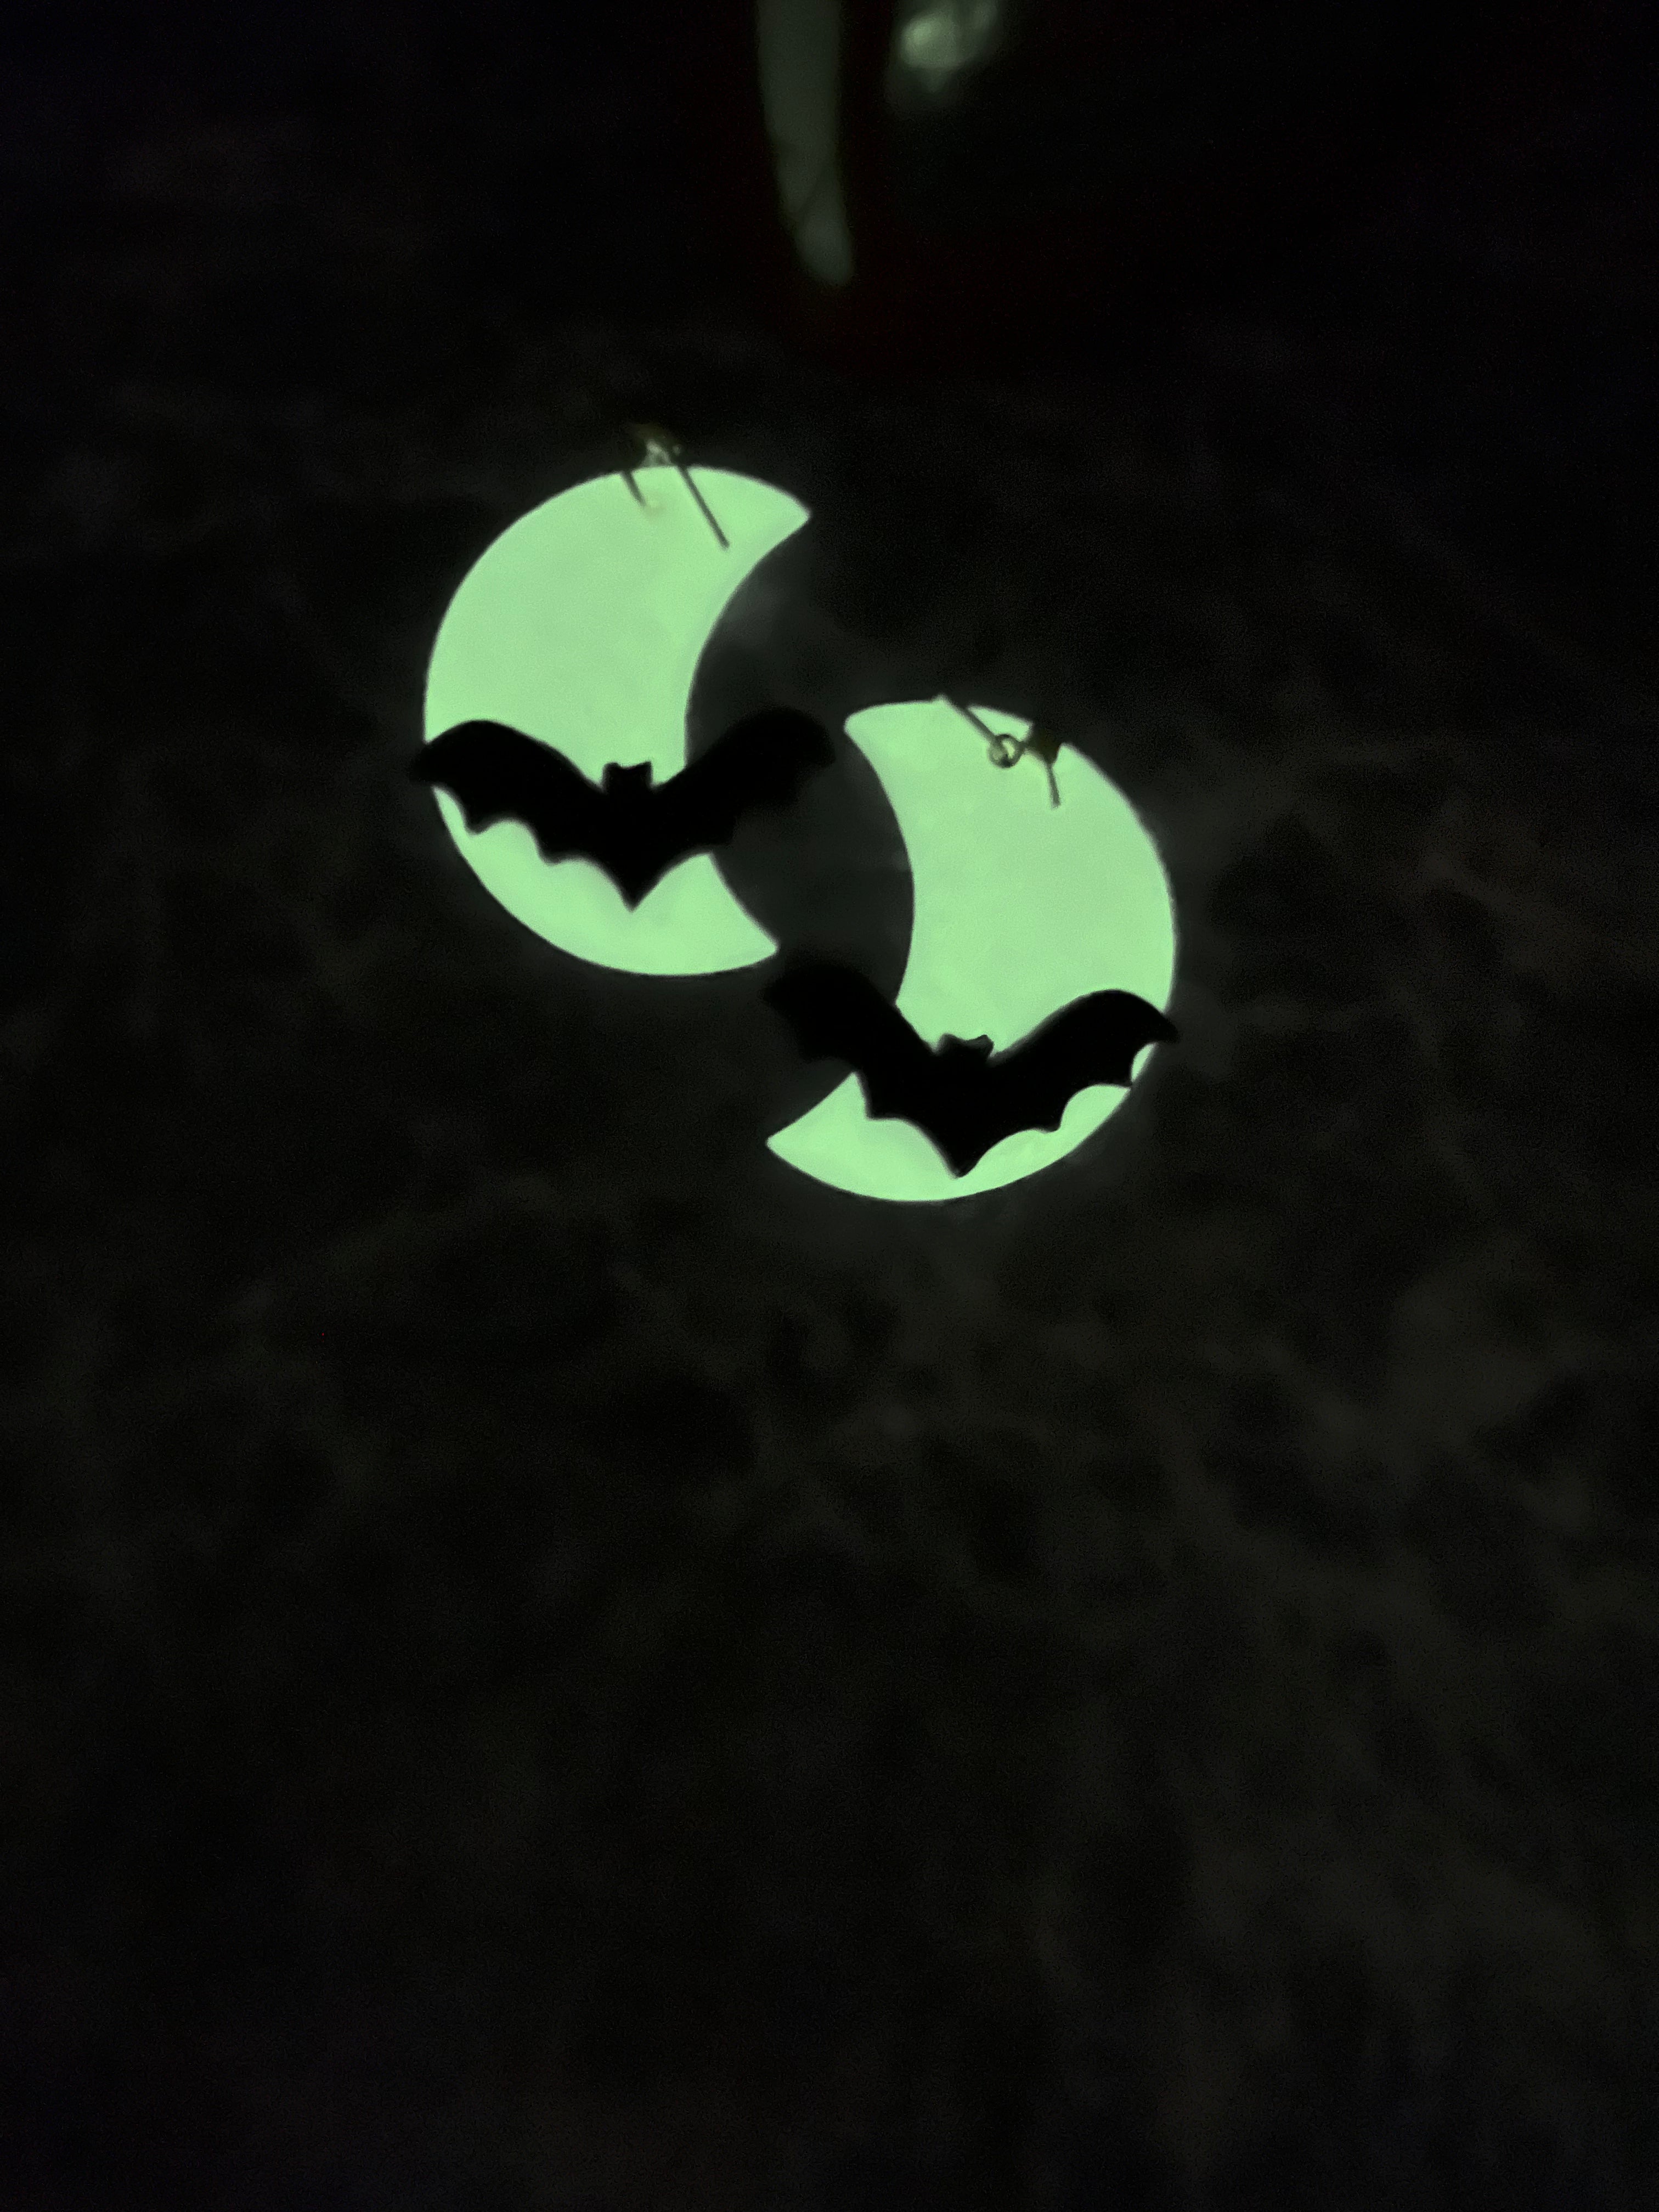 Crescent moon with bat